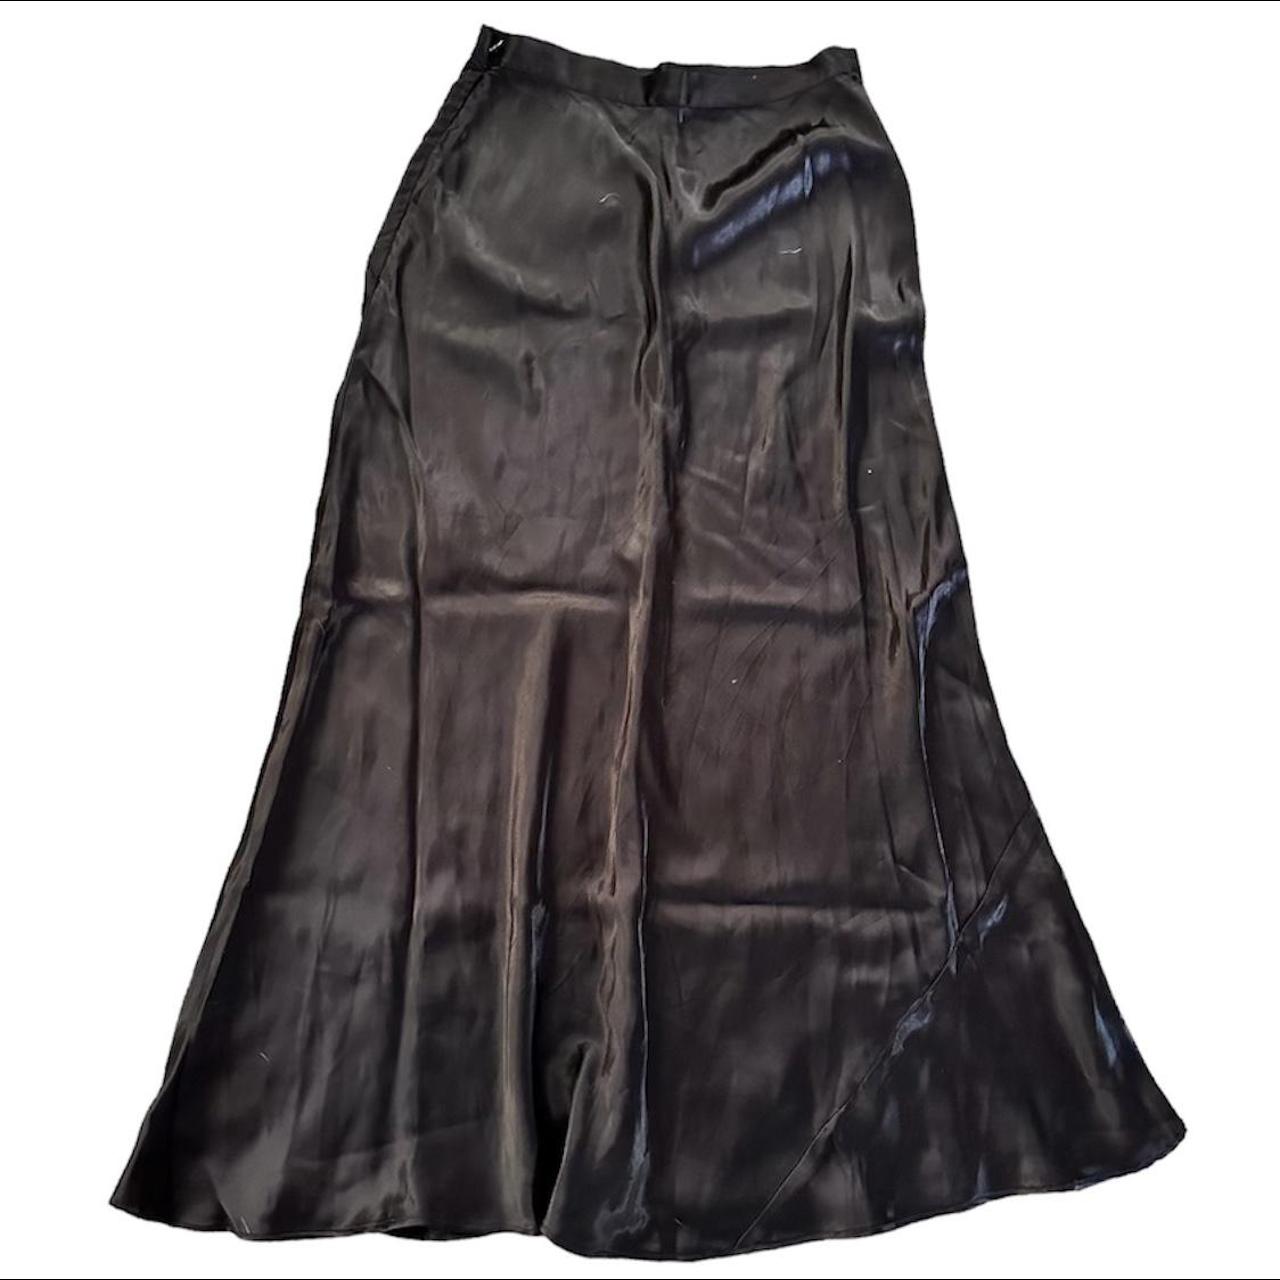 Urban Outfitters Women's Black Skirt